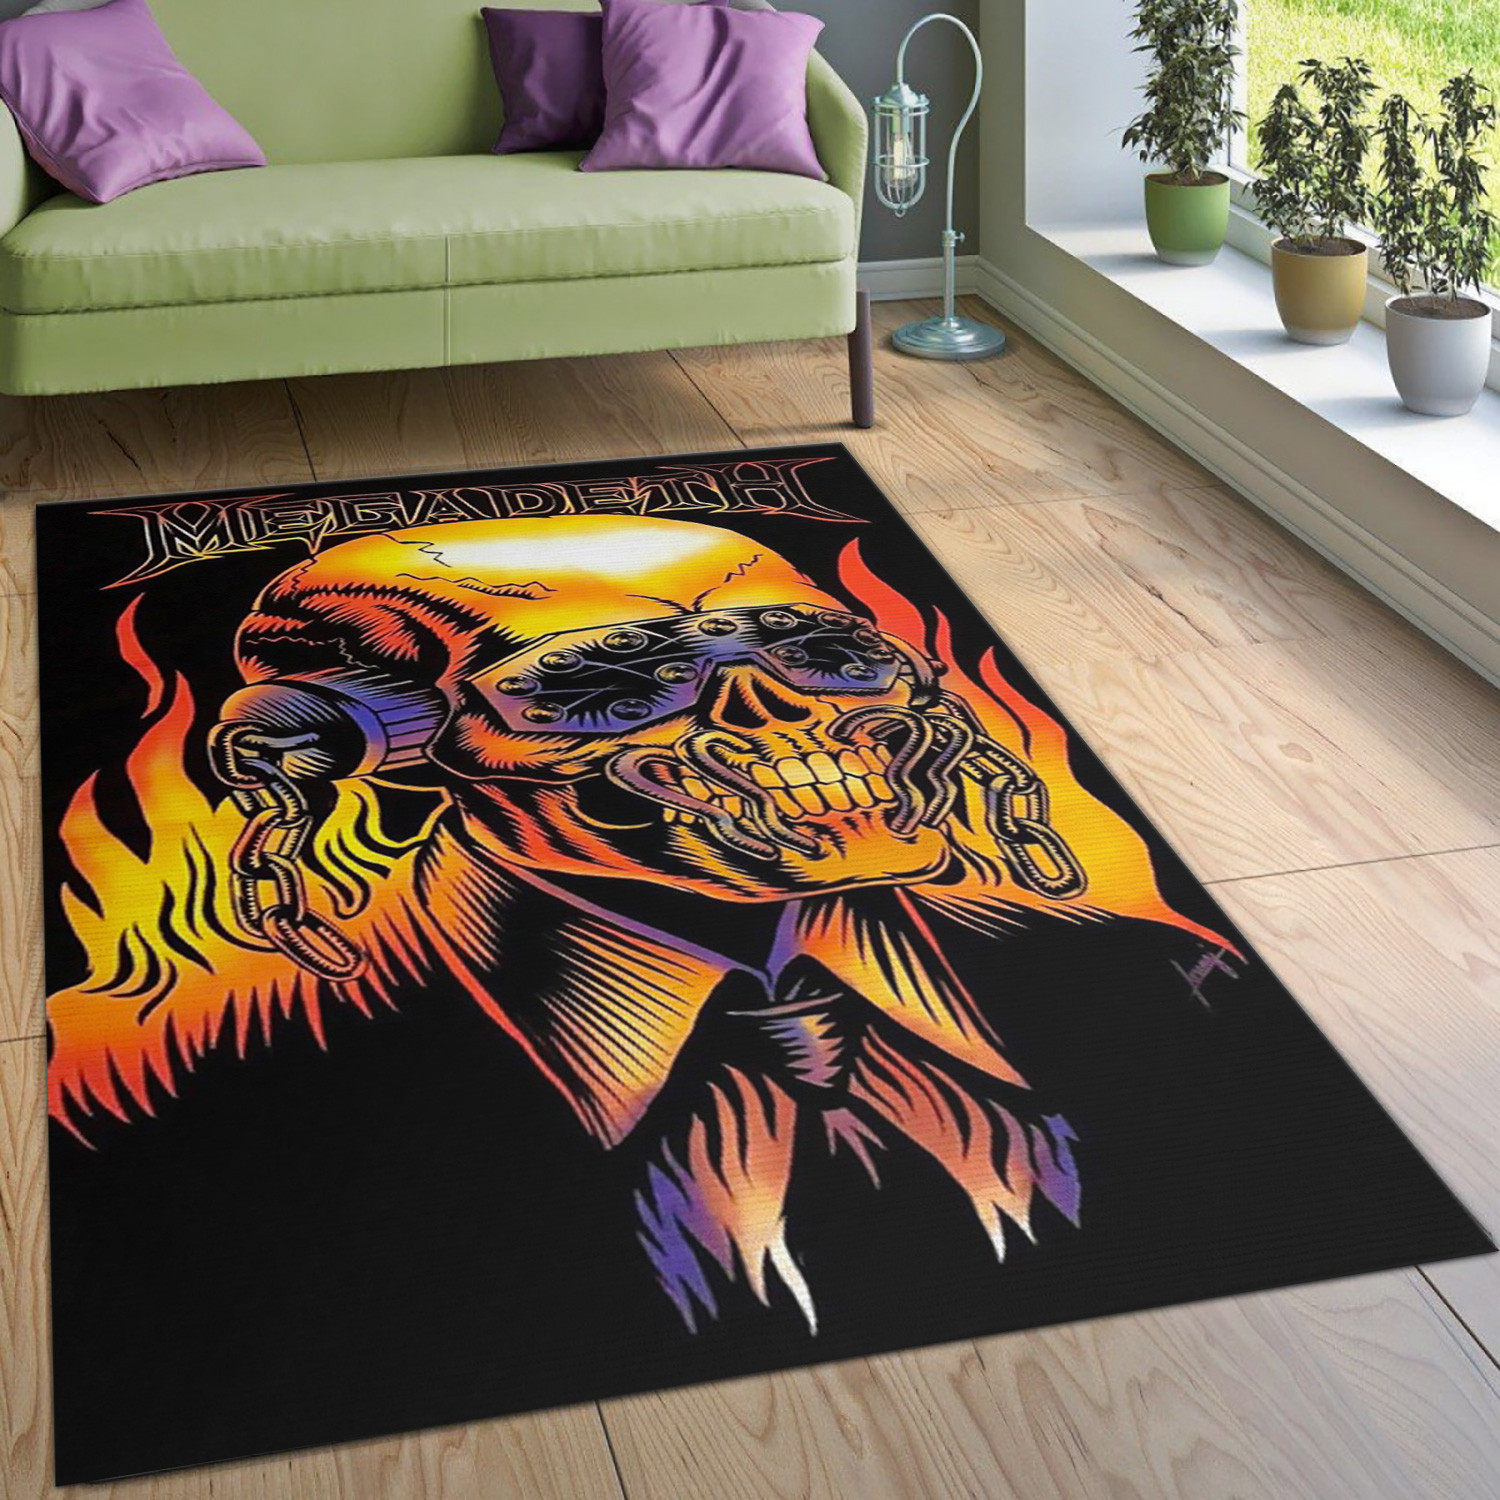 Megadeth Band Area Rug Music Floor Decor Carpet Titles 1